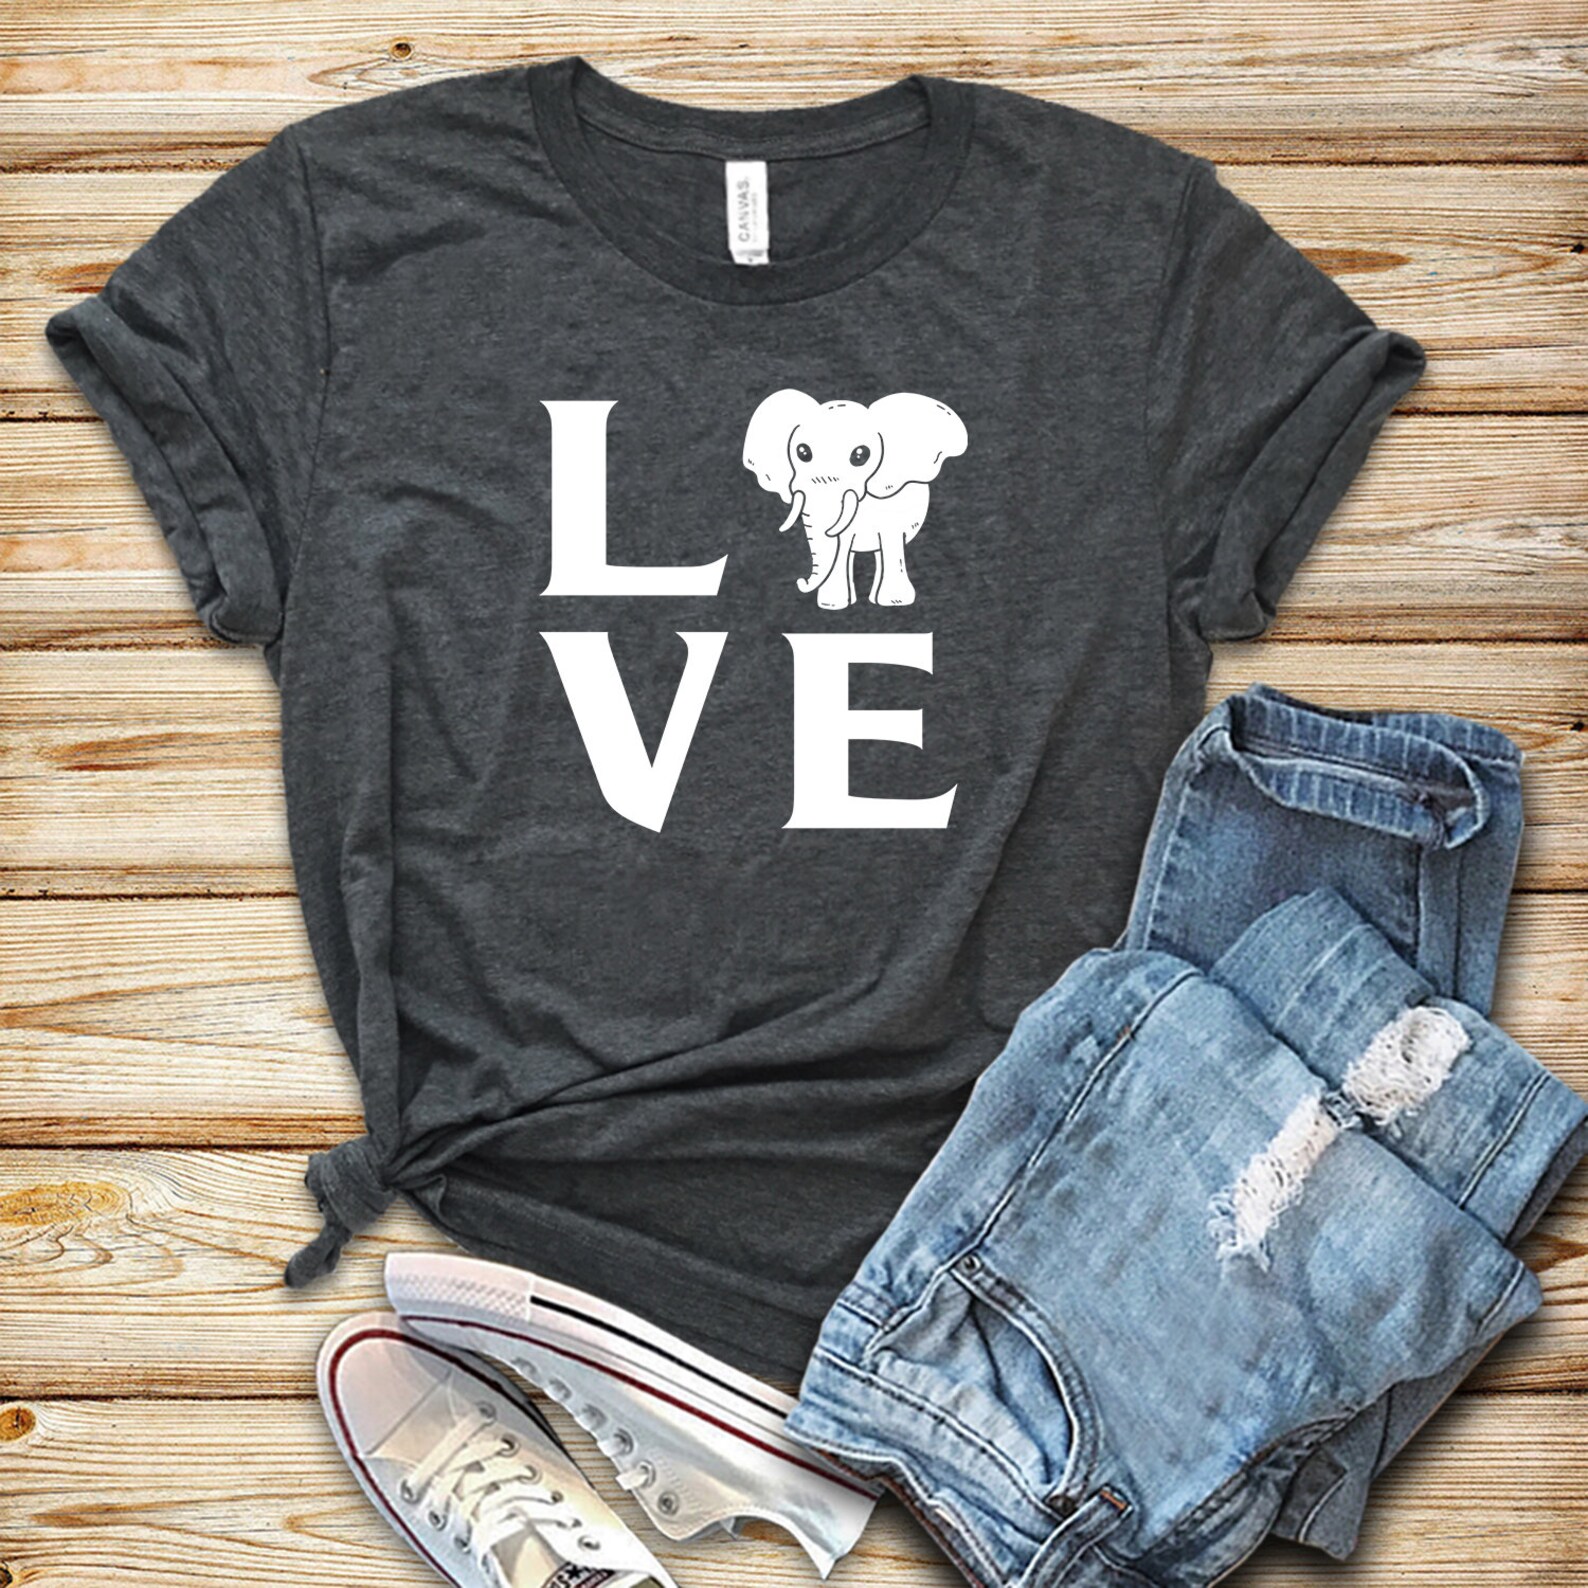 Love Elephant / Shirt / Tank Top / Hoodie / Save The Elephants | Etsy